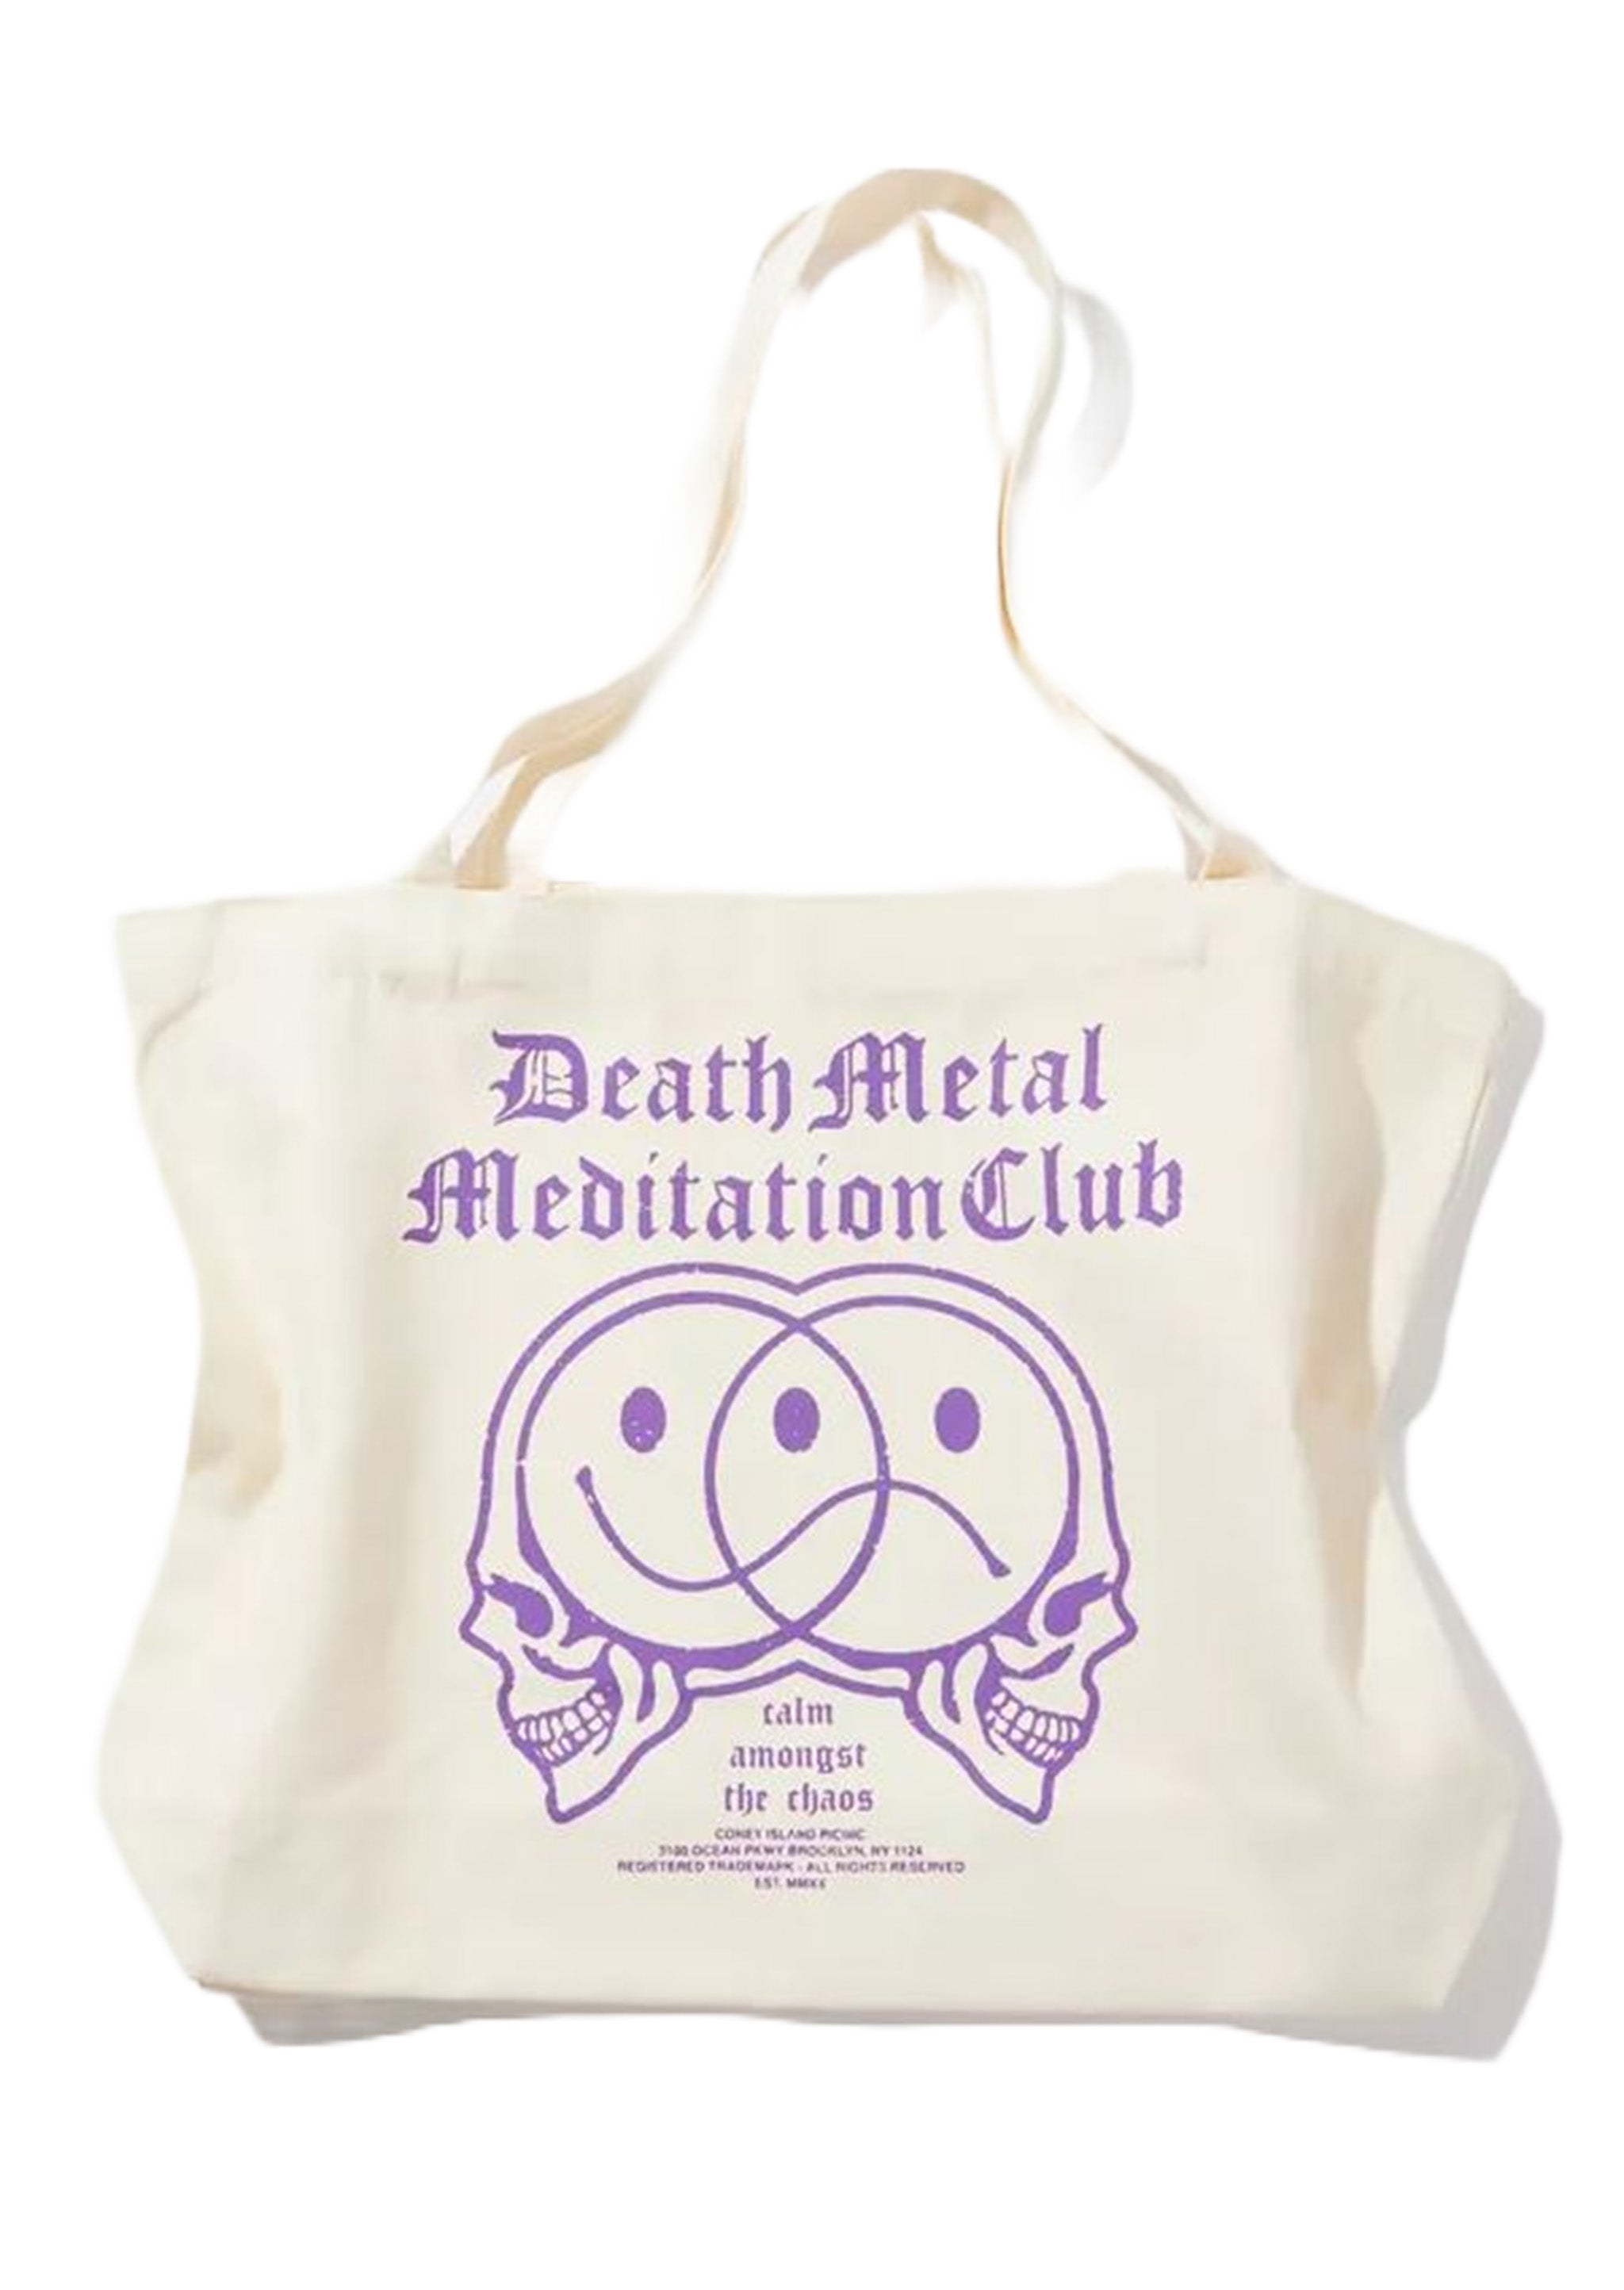 Death Metal Meditation Club Tote Bag